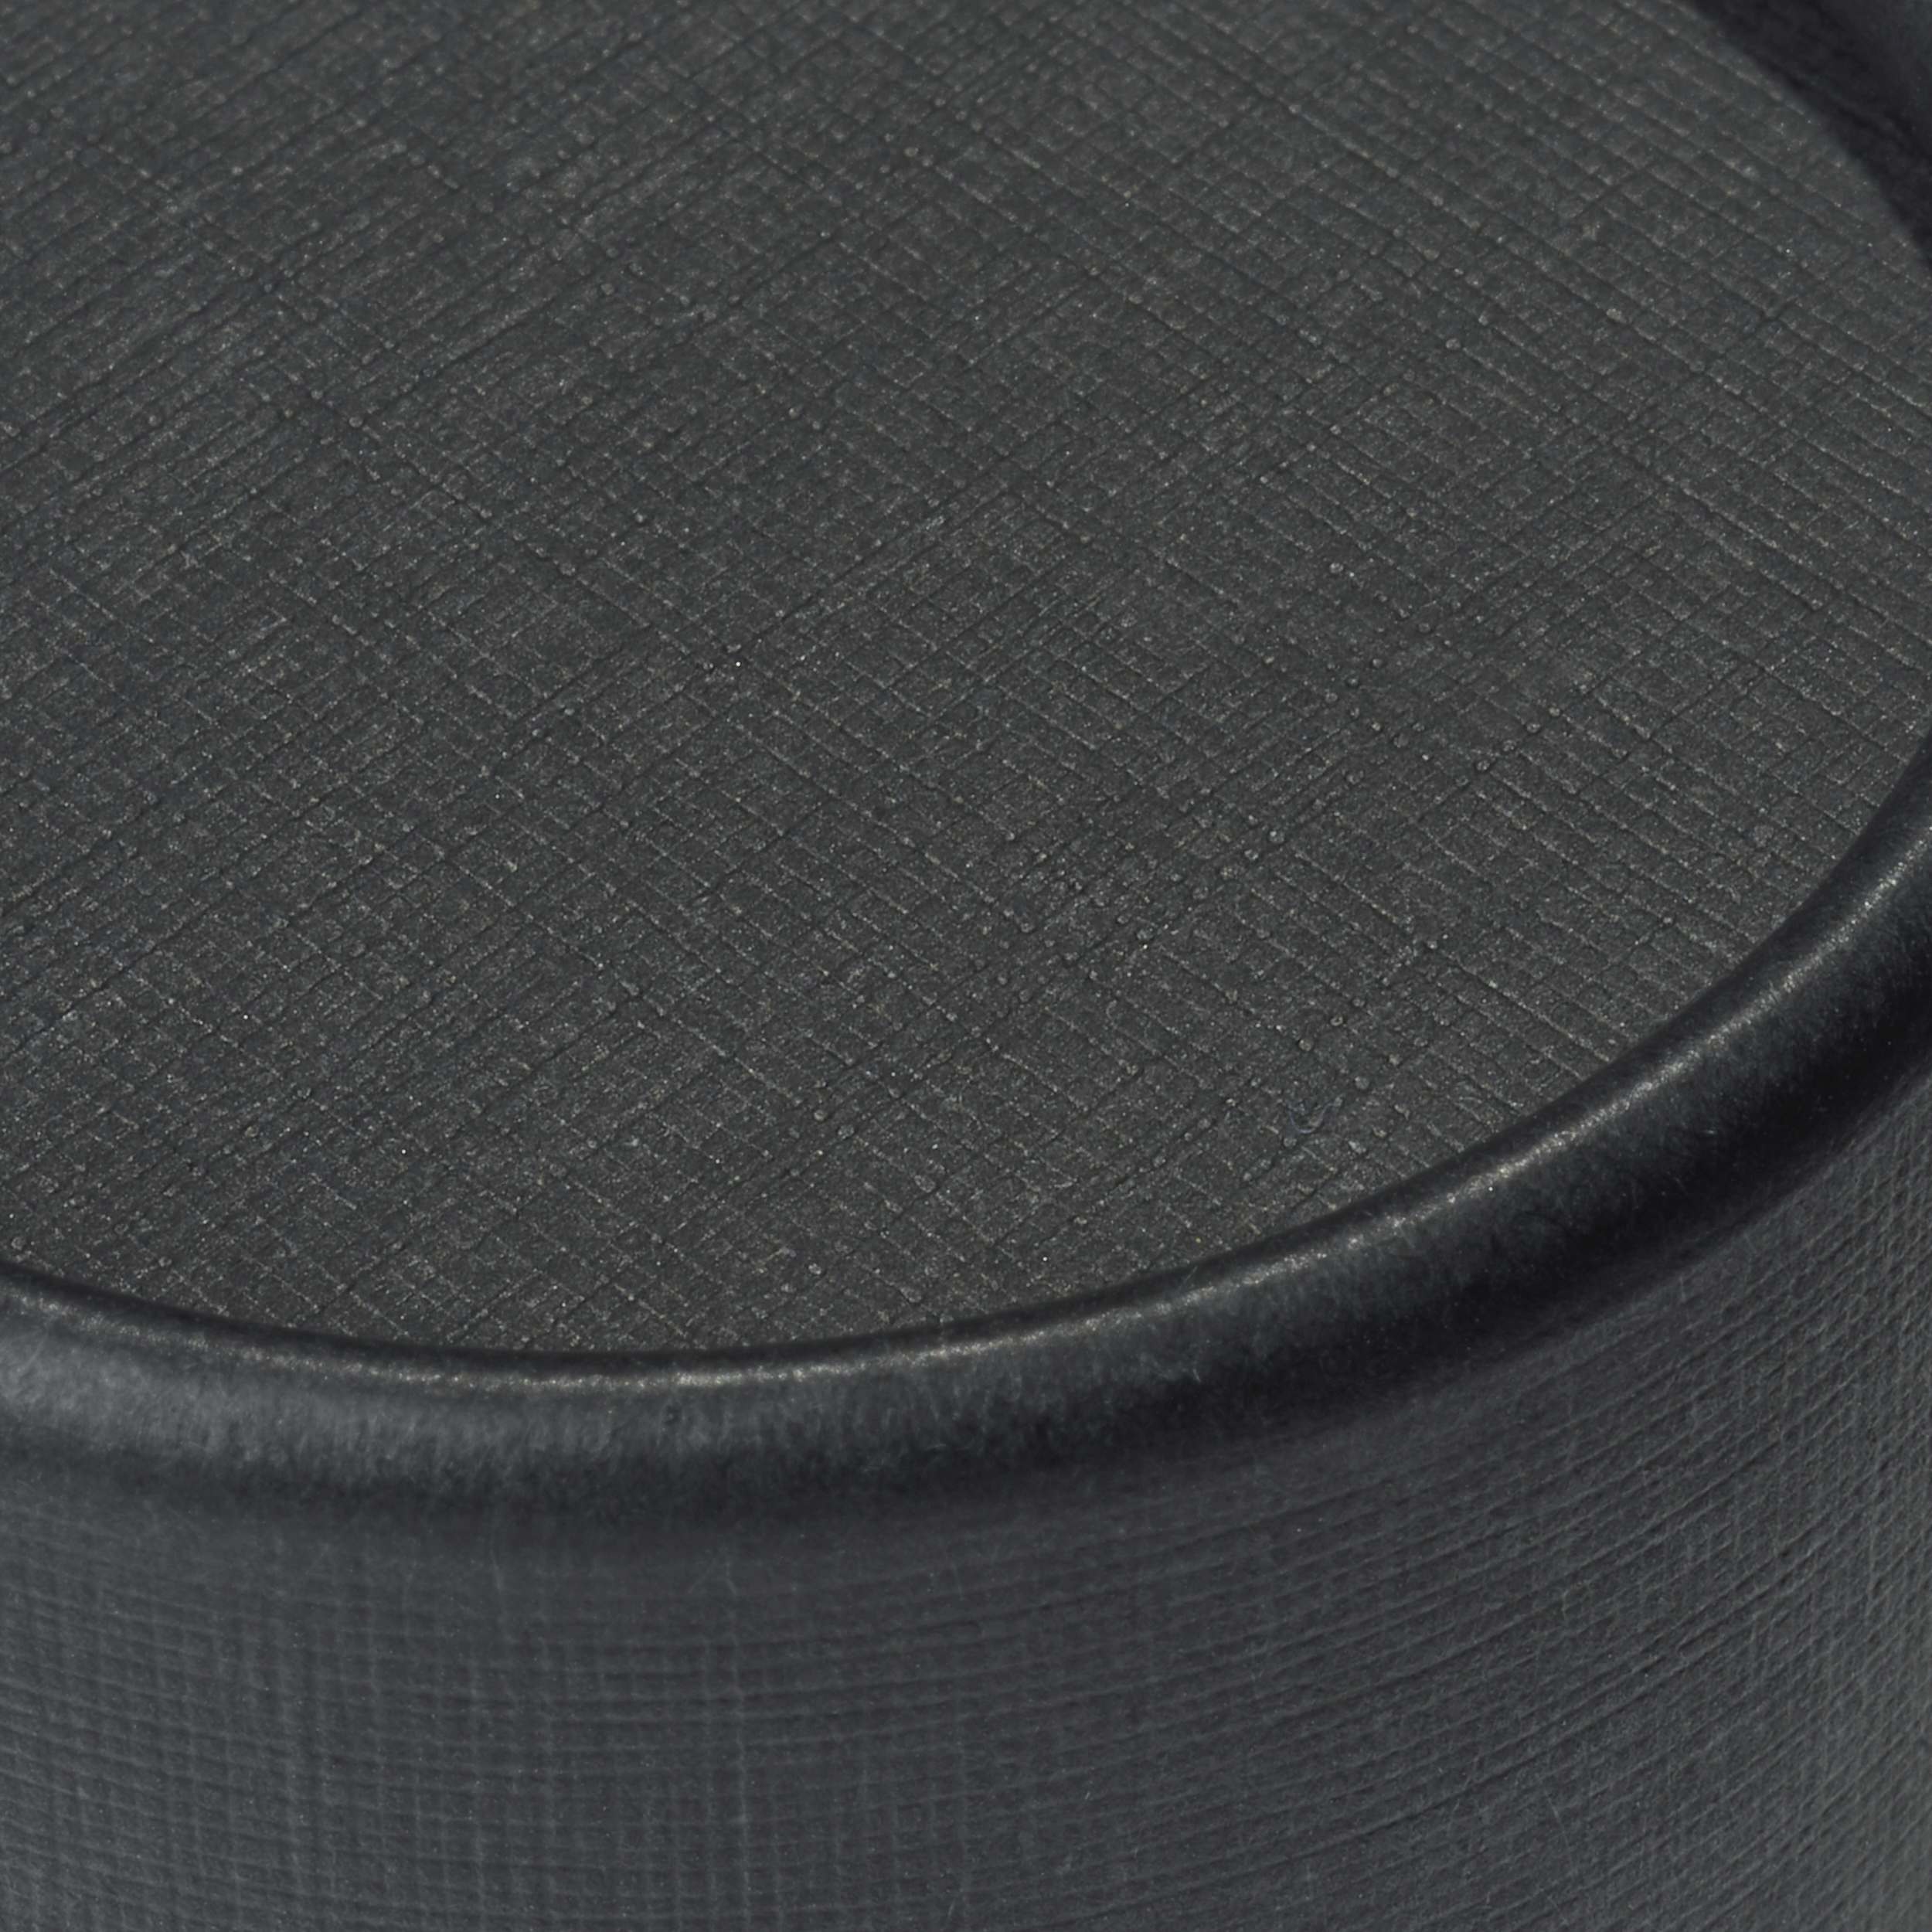 Pappdose schwarz linon | 110 x 34 mm I food grade